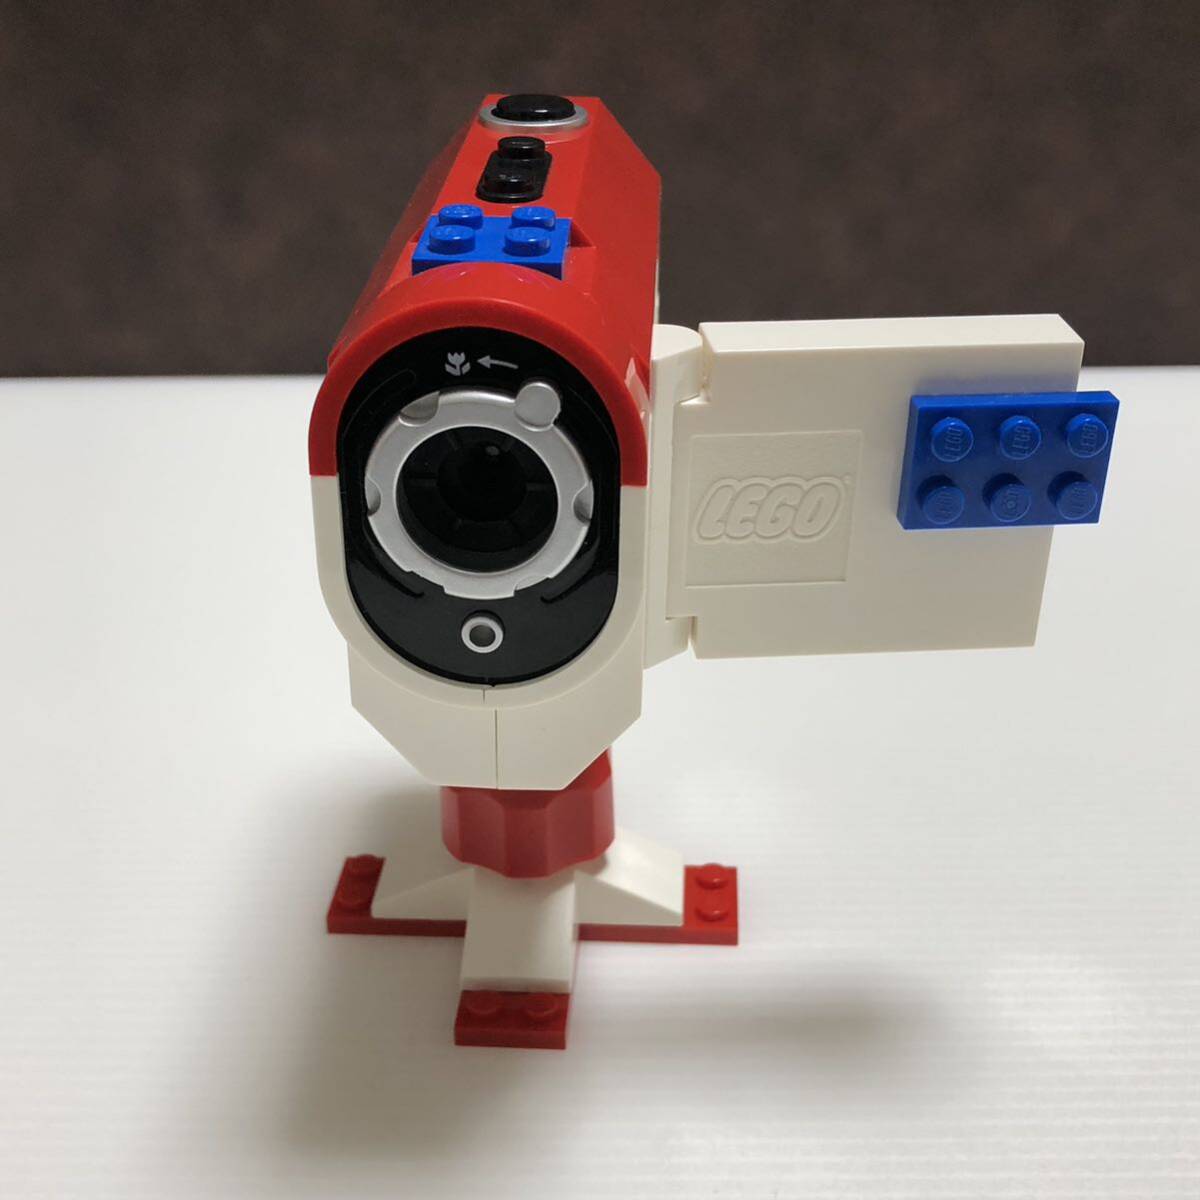 m227-0261-15 ジャンク Lego Stop Animation Video Camera レゴ ストップアニメーション ビデオカメラの画像2